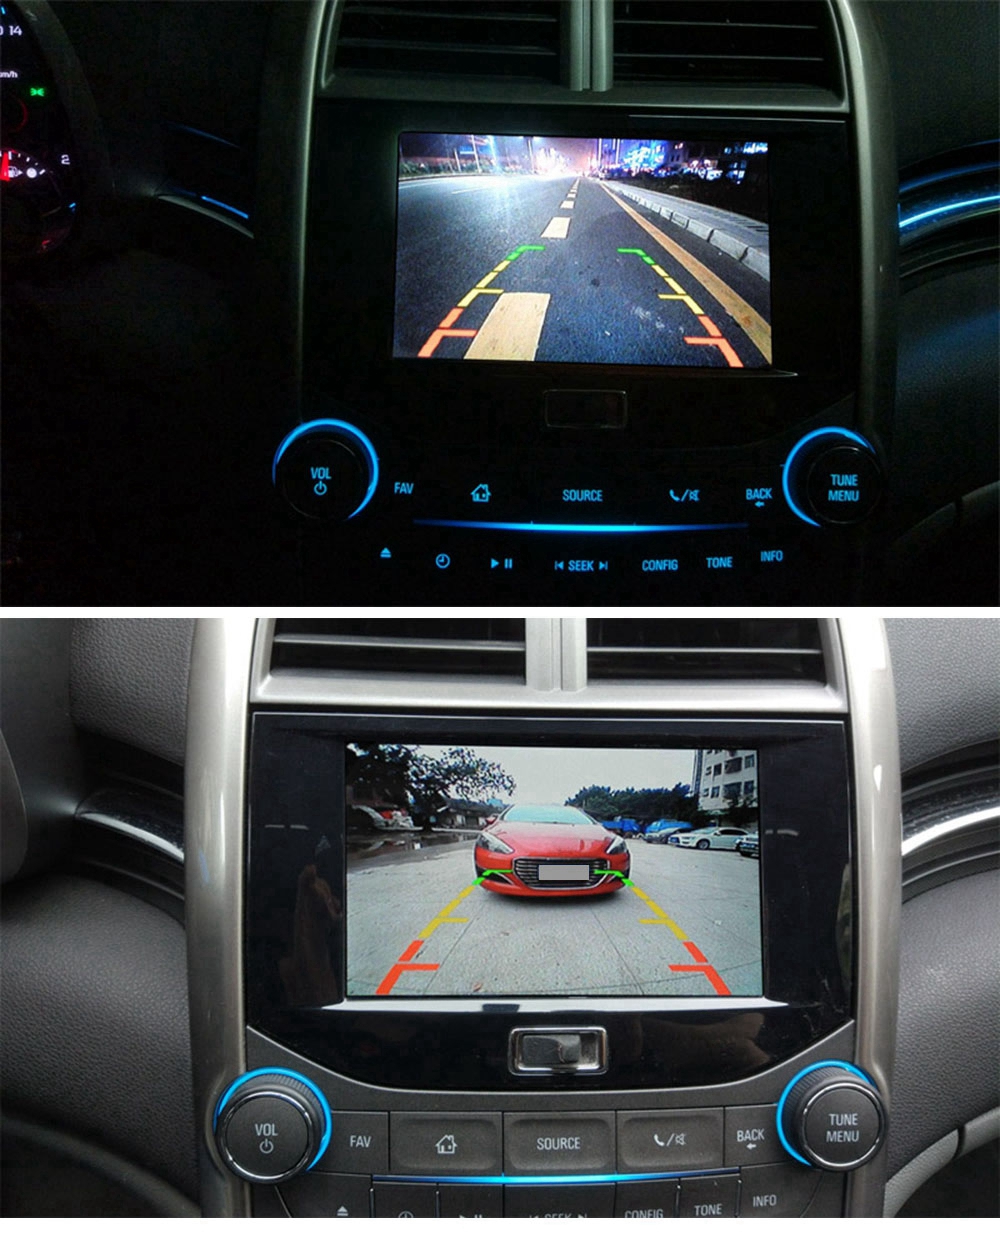 ZIQIAO 8 LED Car 170-degree Night Vision Rear View Backup Camera - BLACK